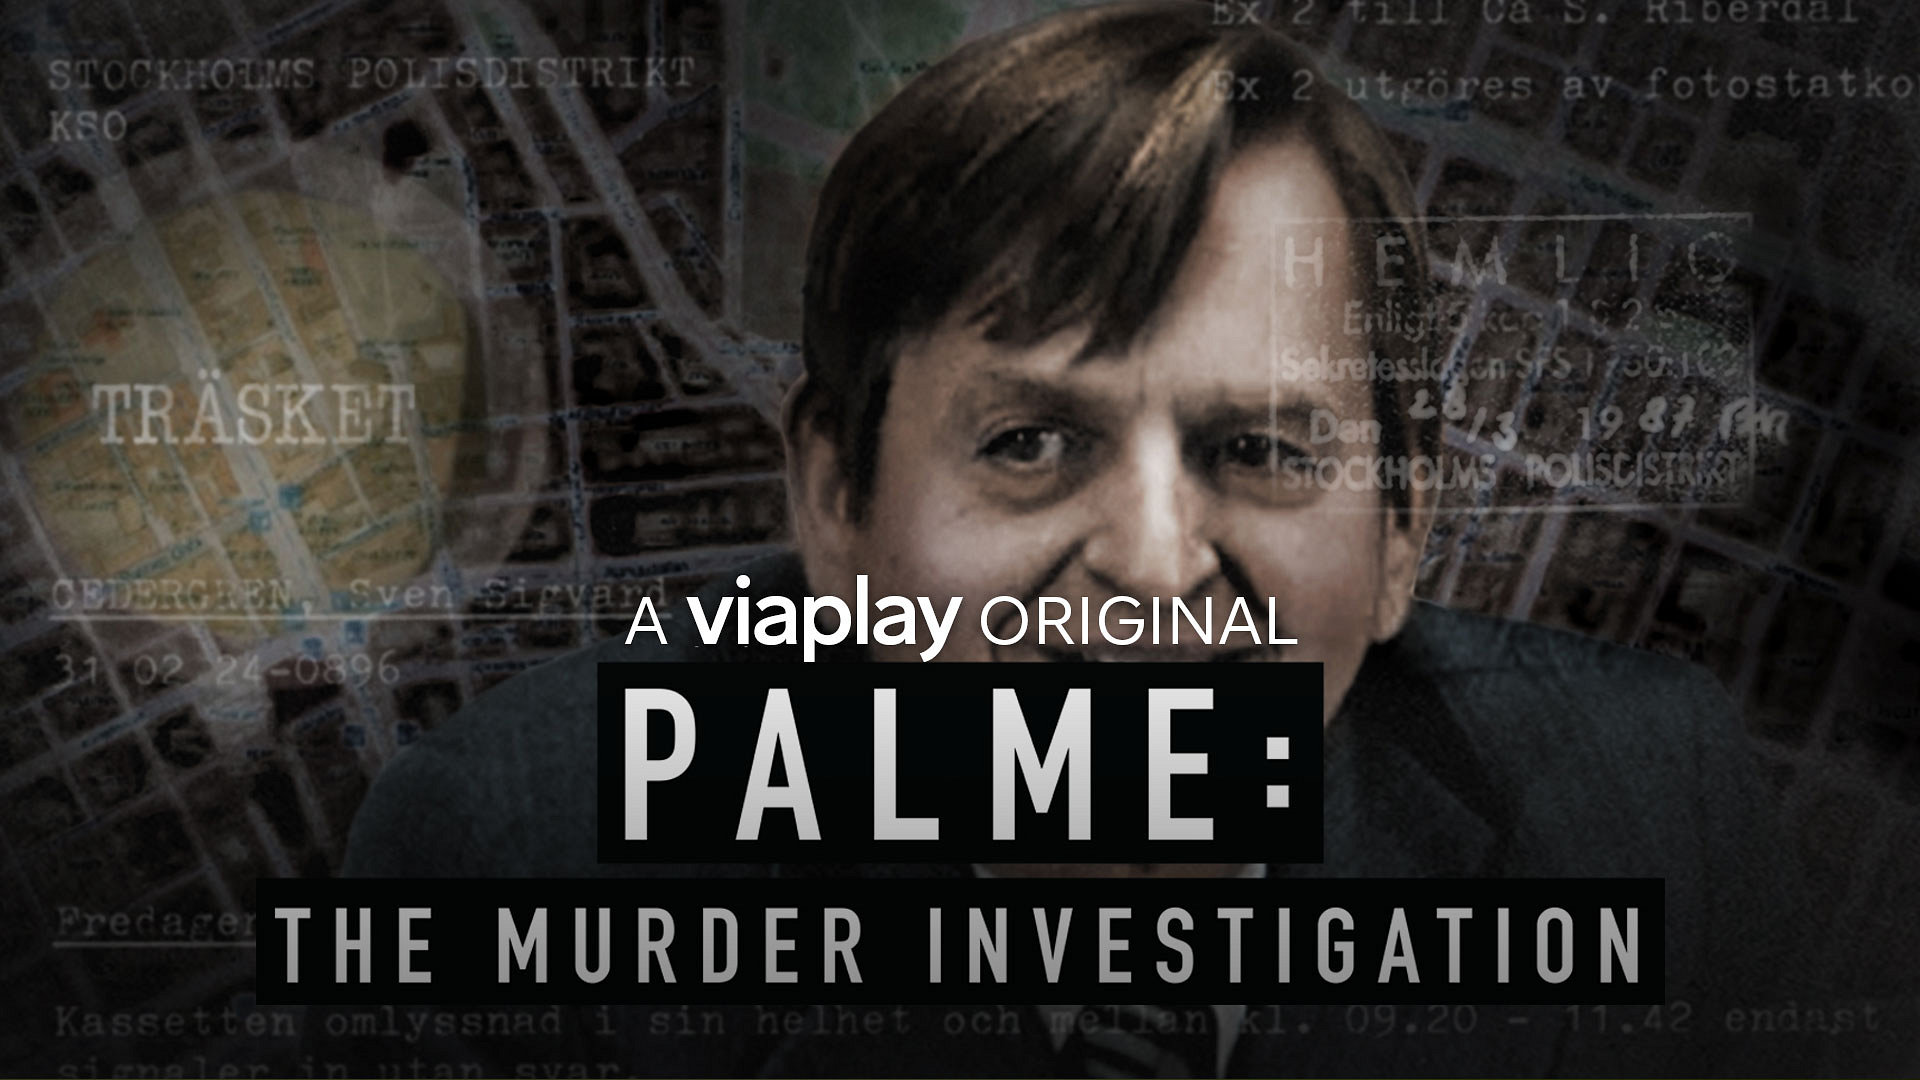 Palme: The Murder Investigation